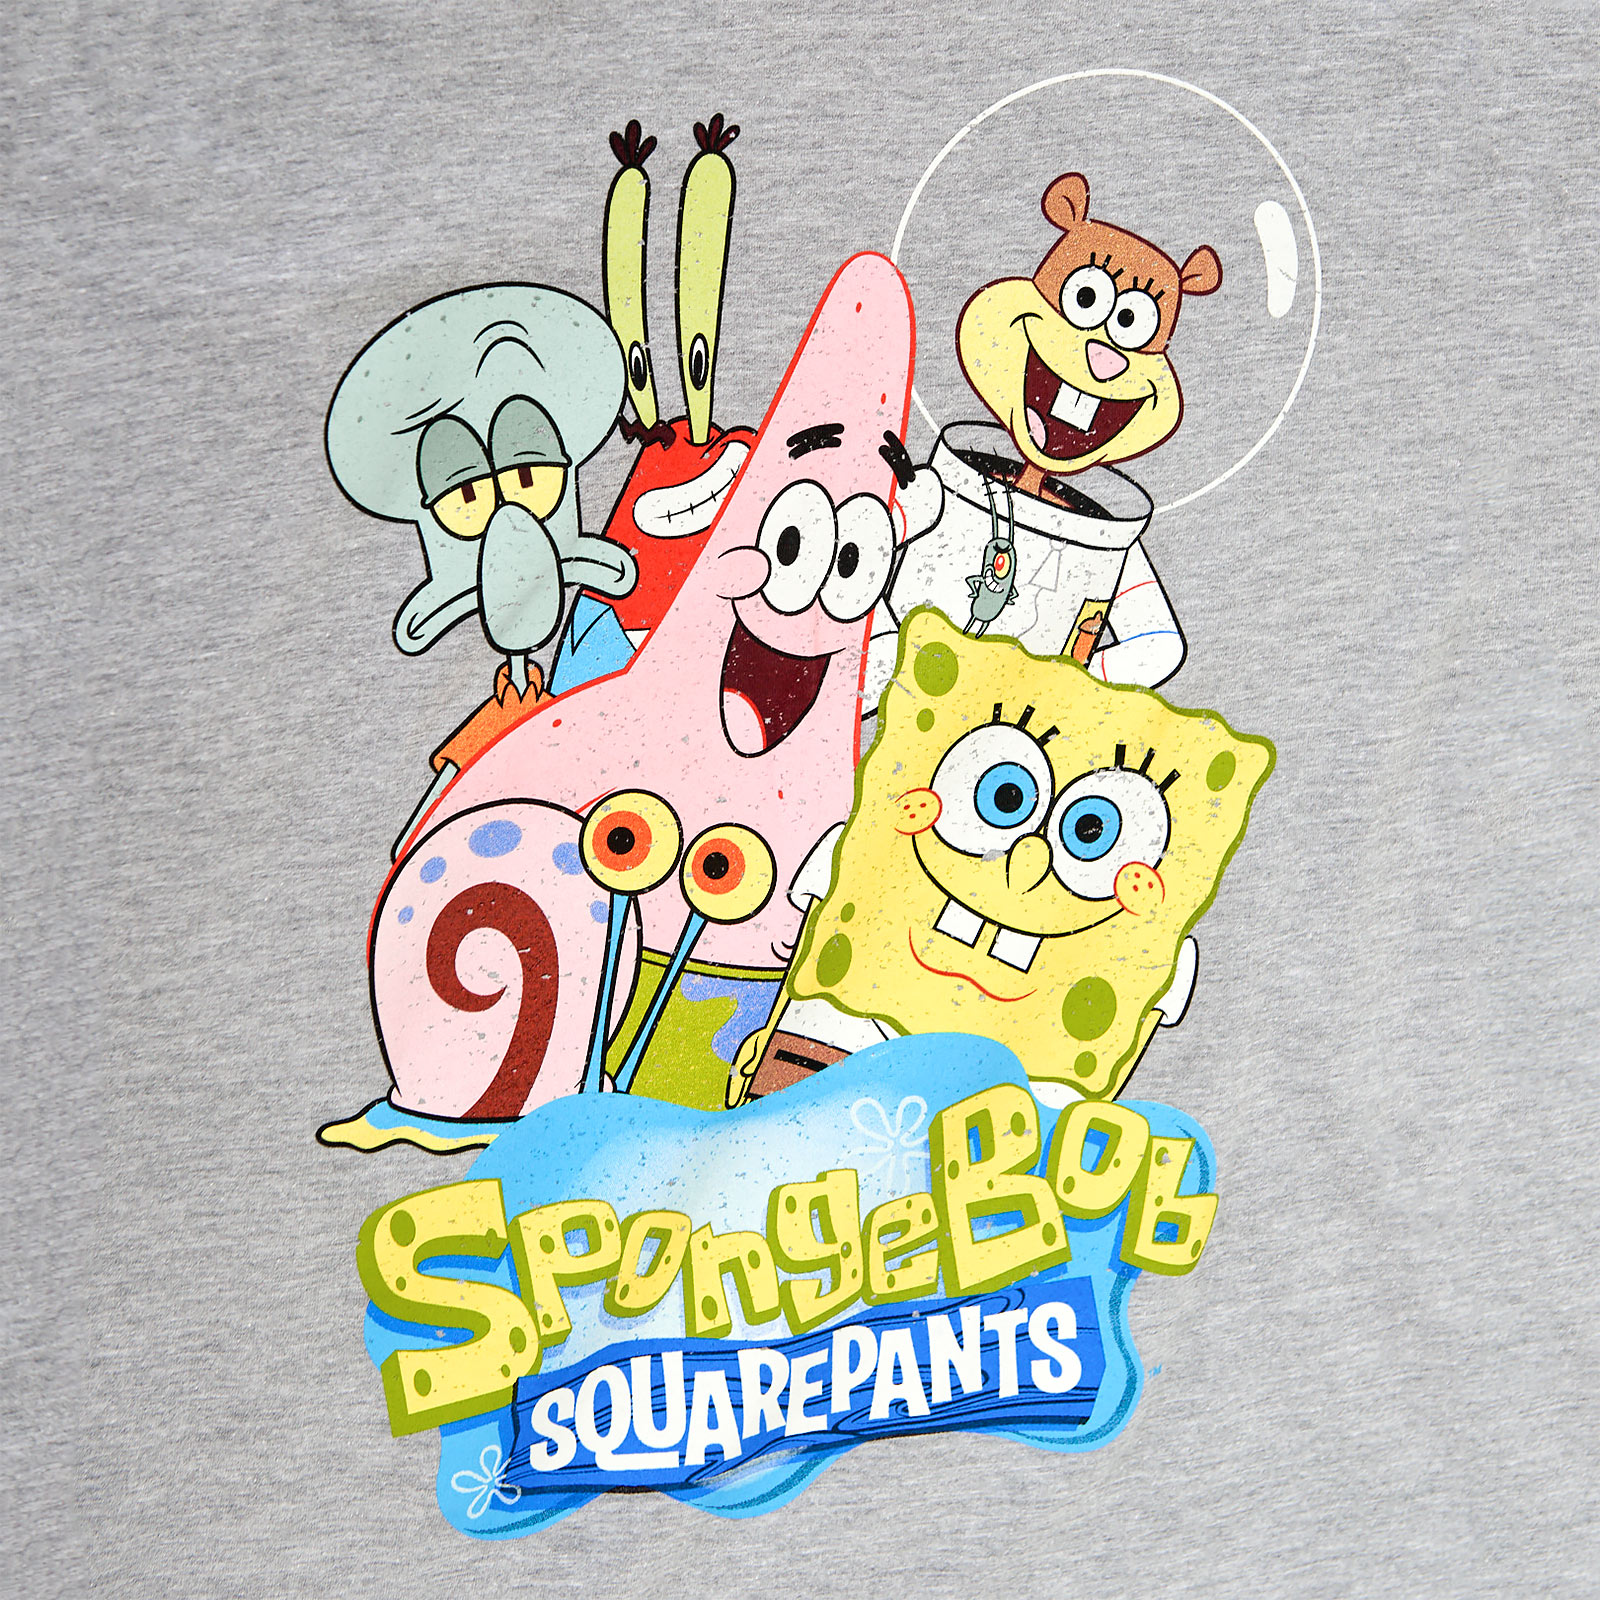 SpongeBob - Friends Together T-shirt grijs